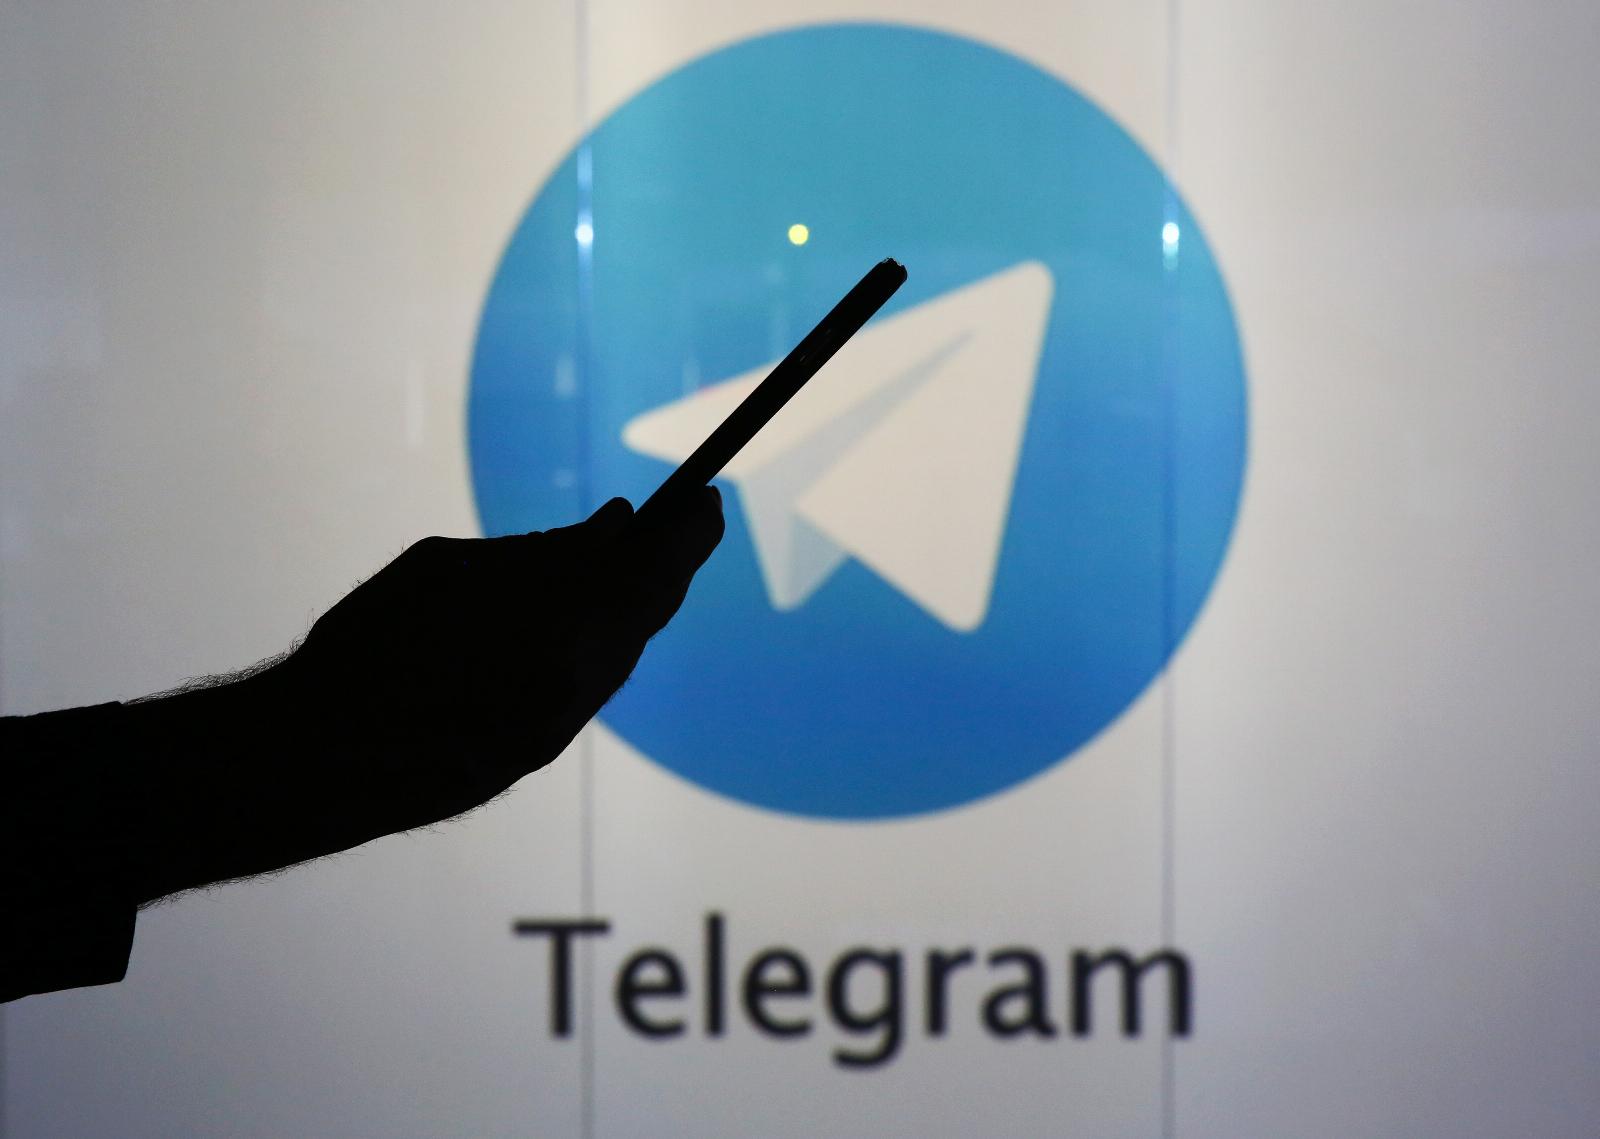 Telegram raises $210 million through bond sales